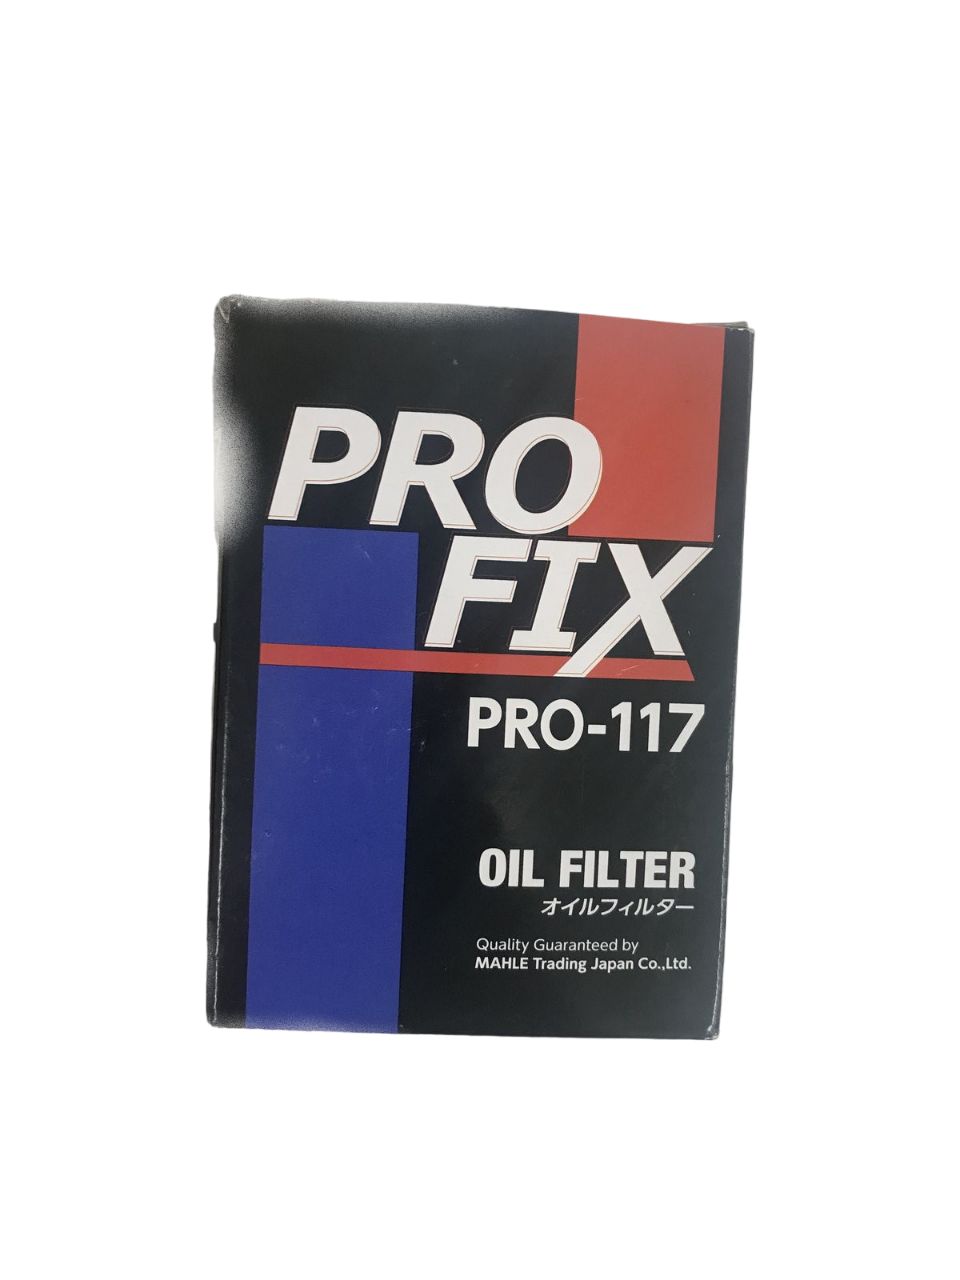 Фильтр масляный PRO-117 PROFIX TOYOTA ZR-FE, 1NR-FE, 1KR-FE, K3-VE